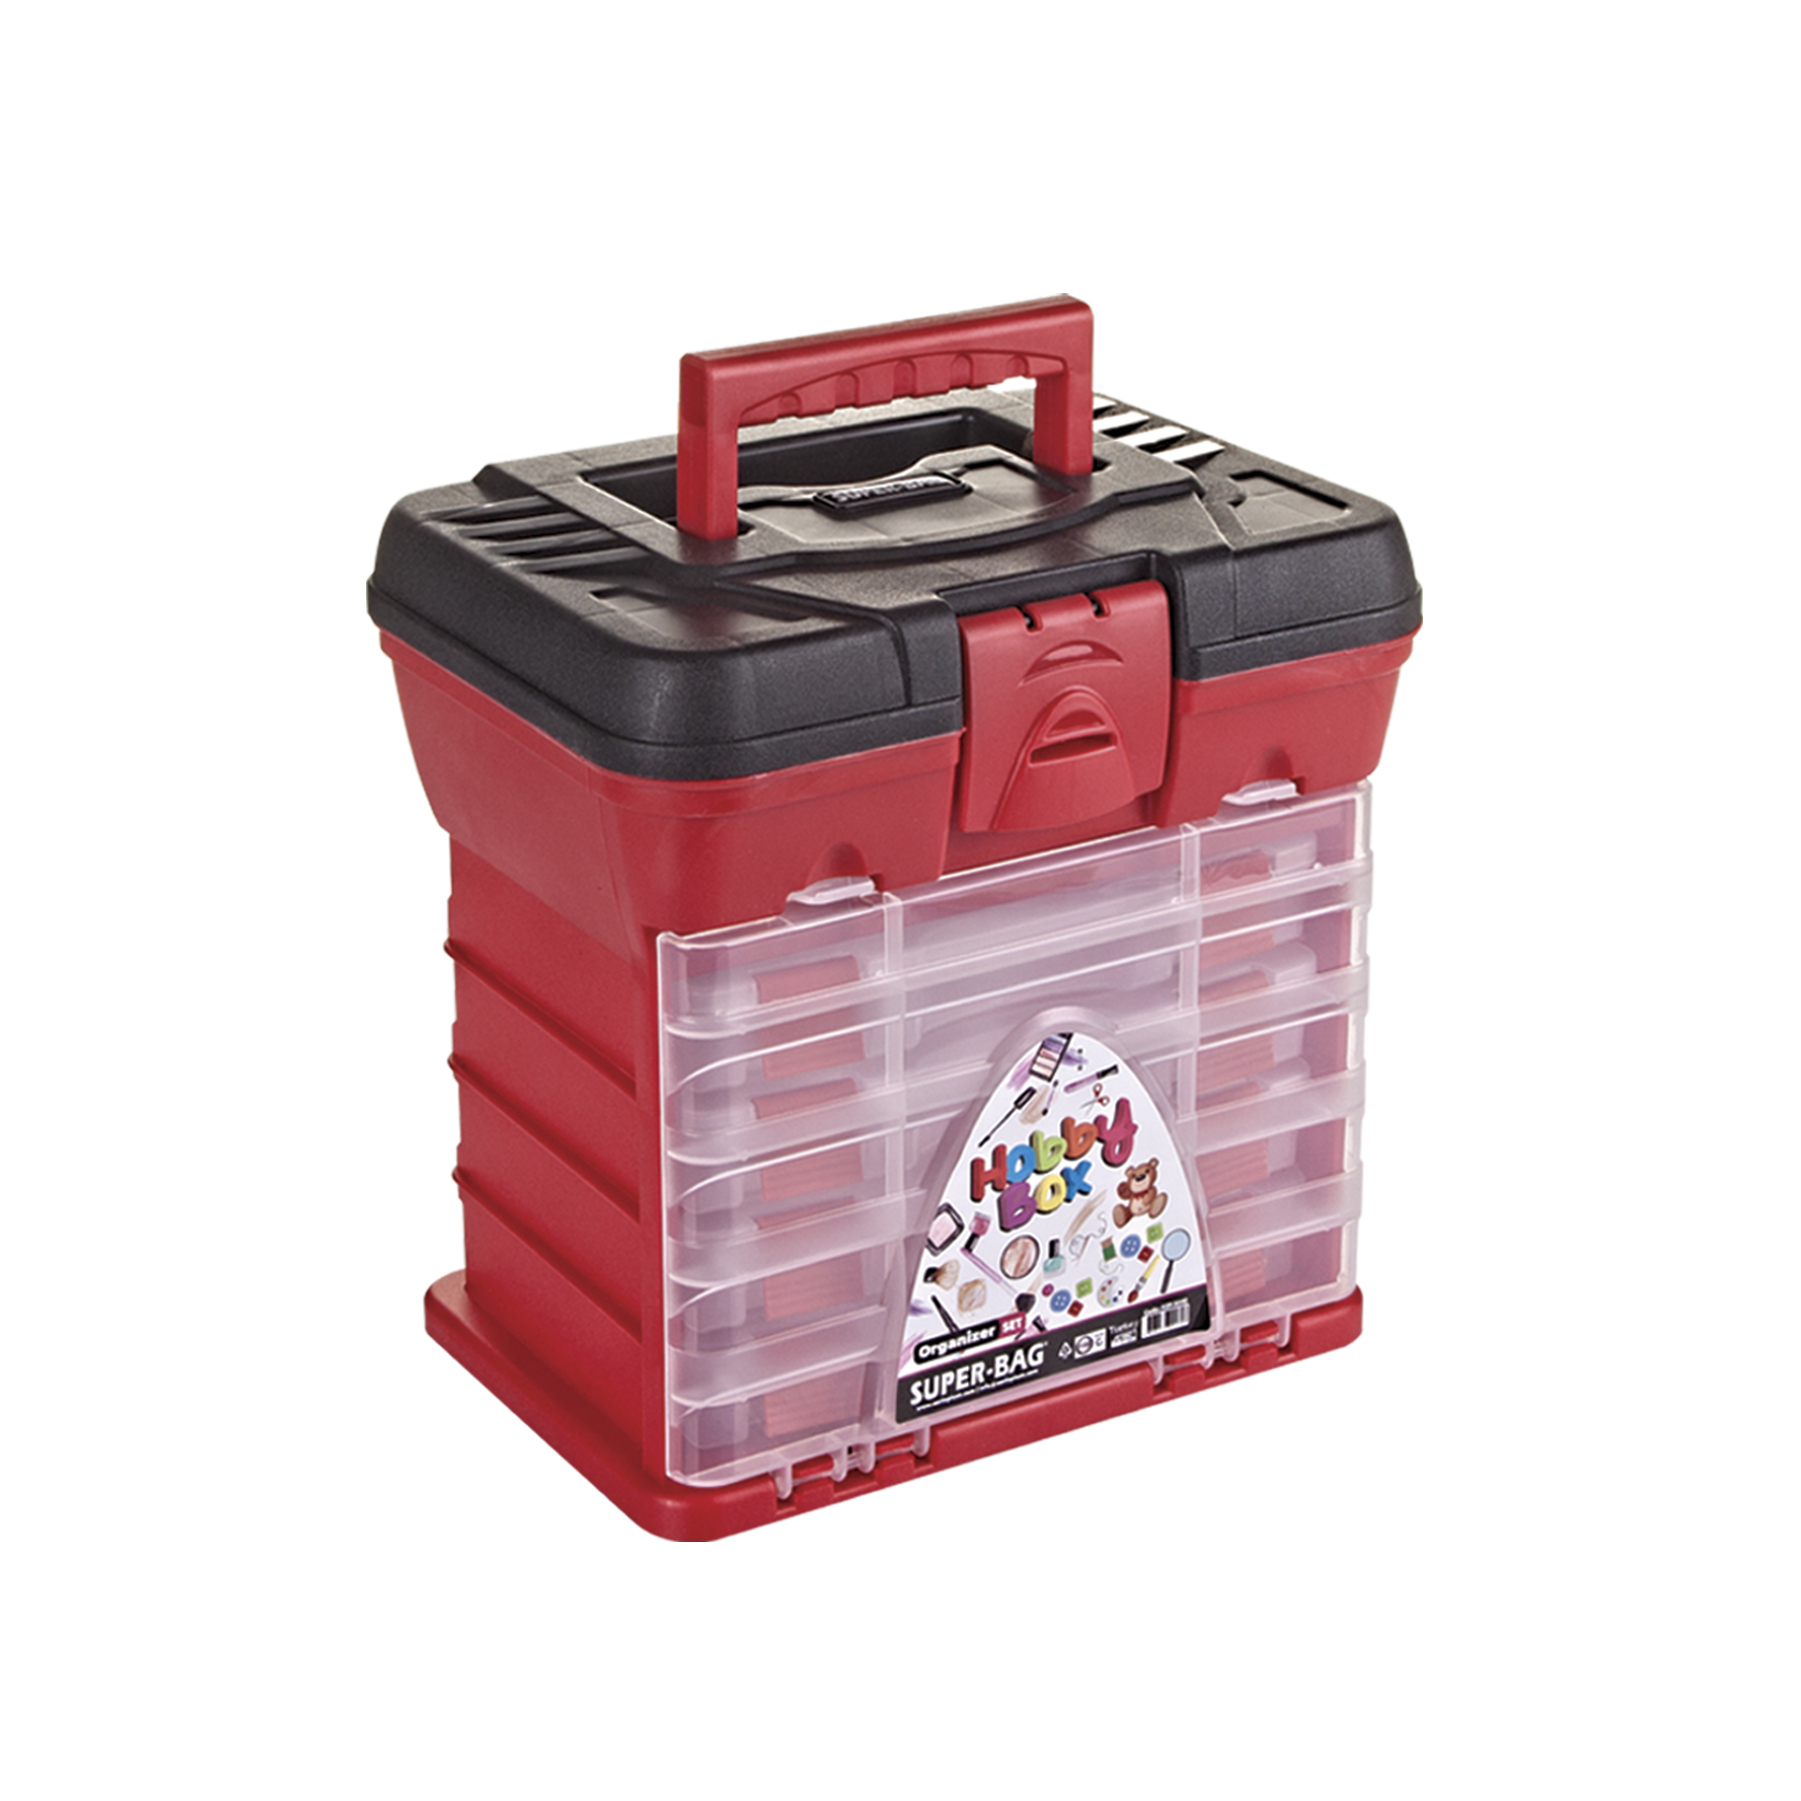 https://www.alderishop.com/media/11755/catalog/ASR-5040-Organizer-Hobby-Box-red-super-bag.jpg